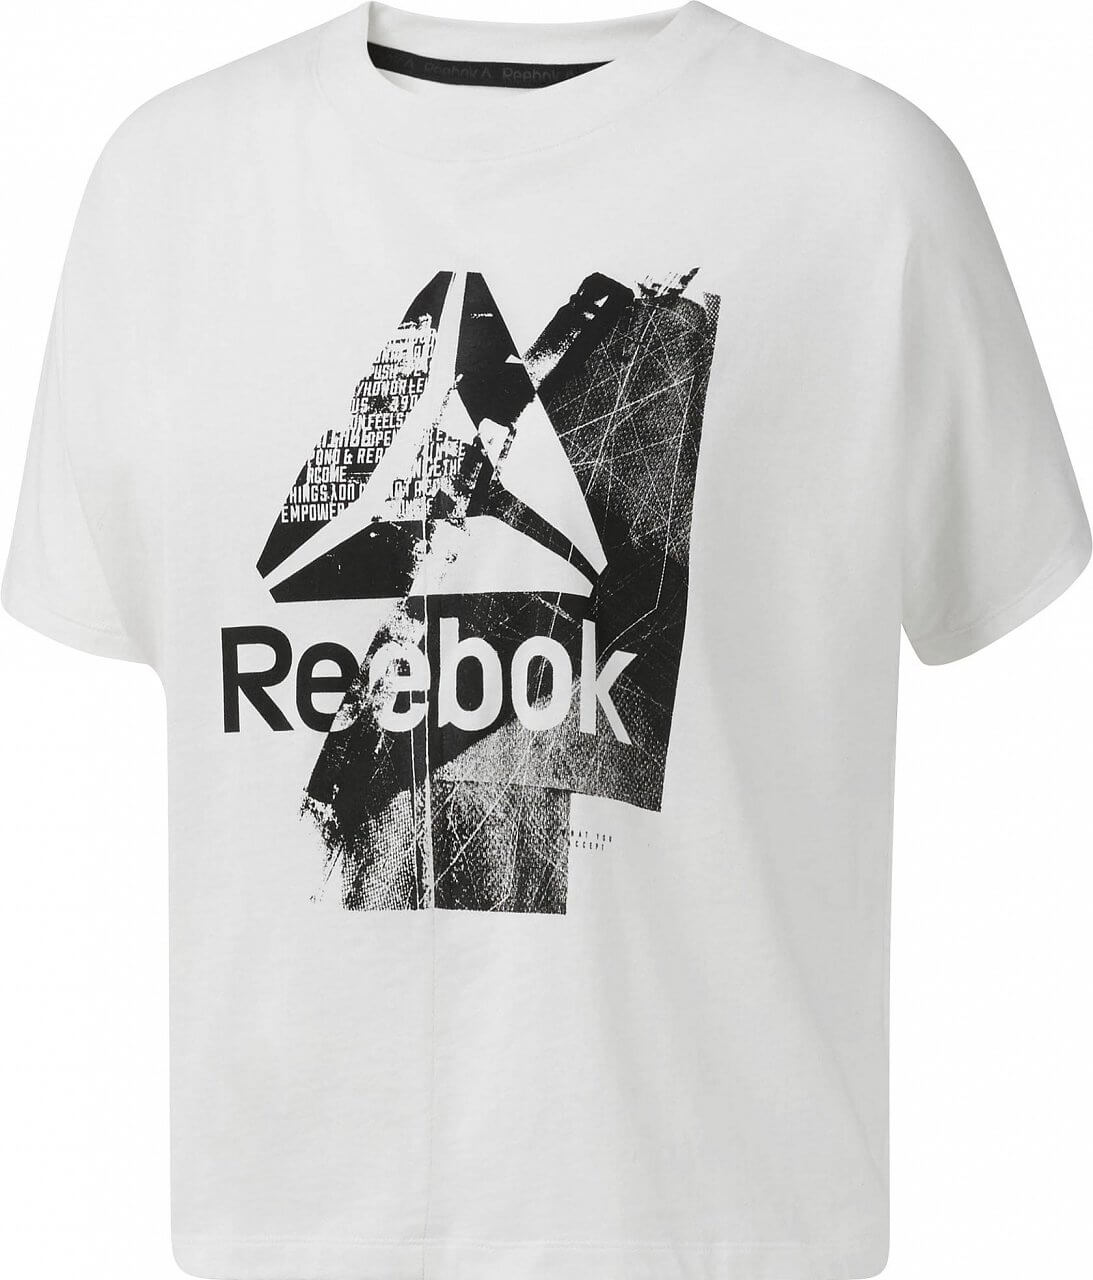 Dámske športové tričko Reebok Graphic Tee